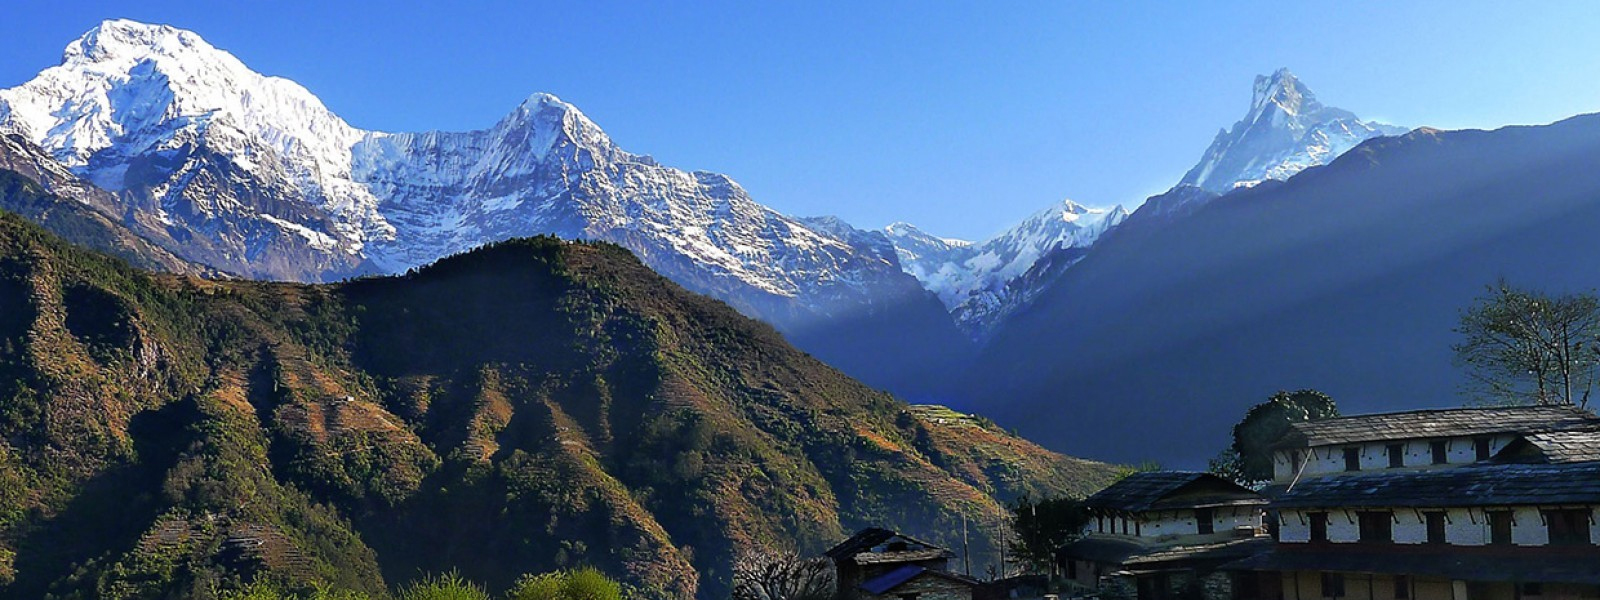 Annapurna range view from Ghandruk Village